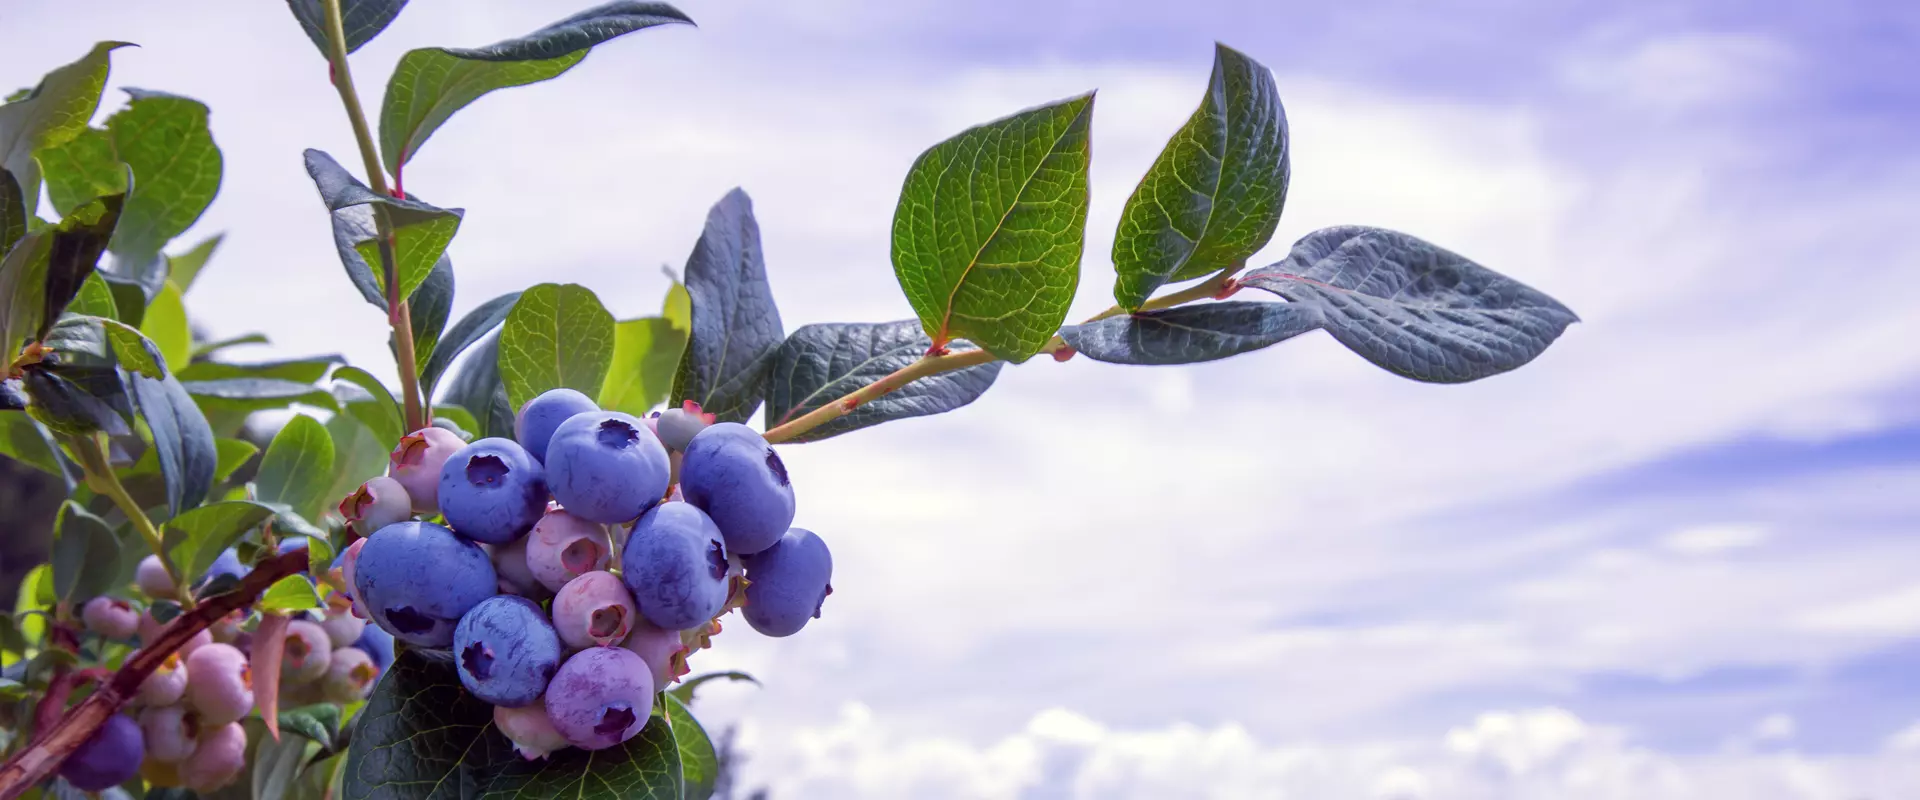 Blueberries against the sky